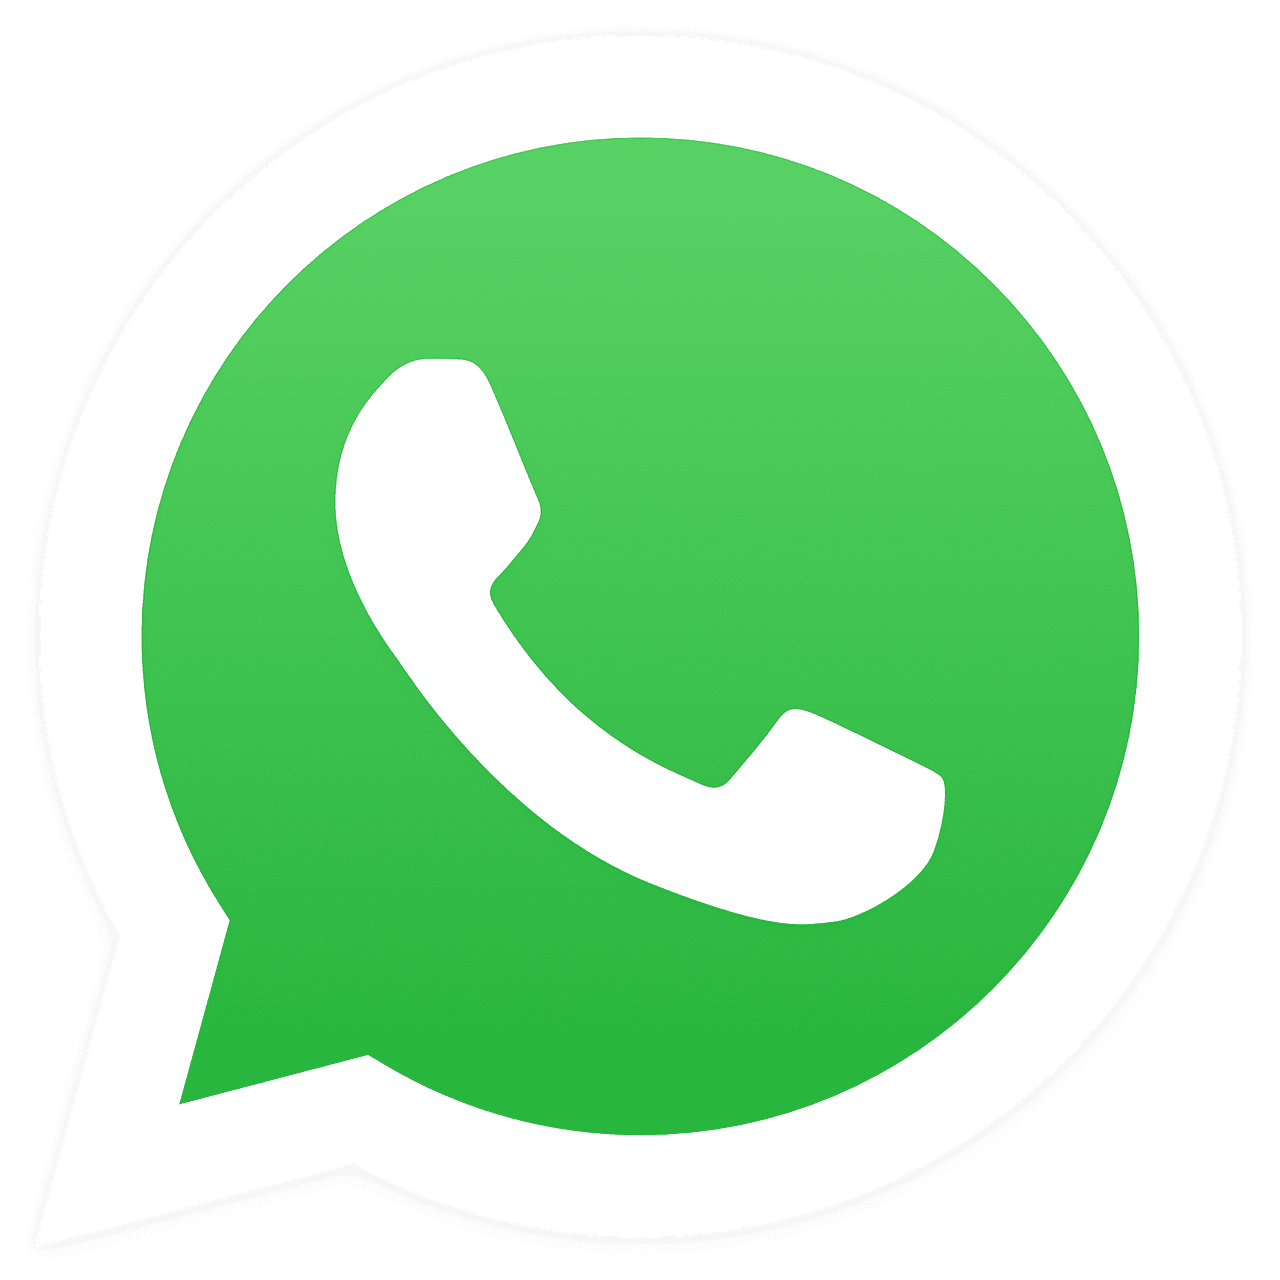 Enlace para ir al chat de WhatsApp